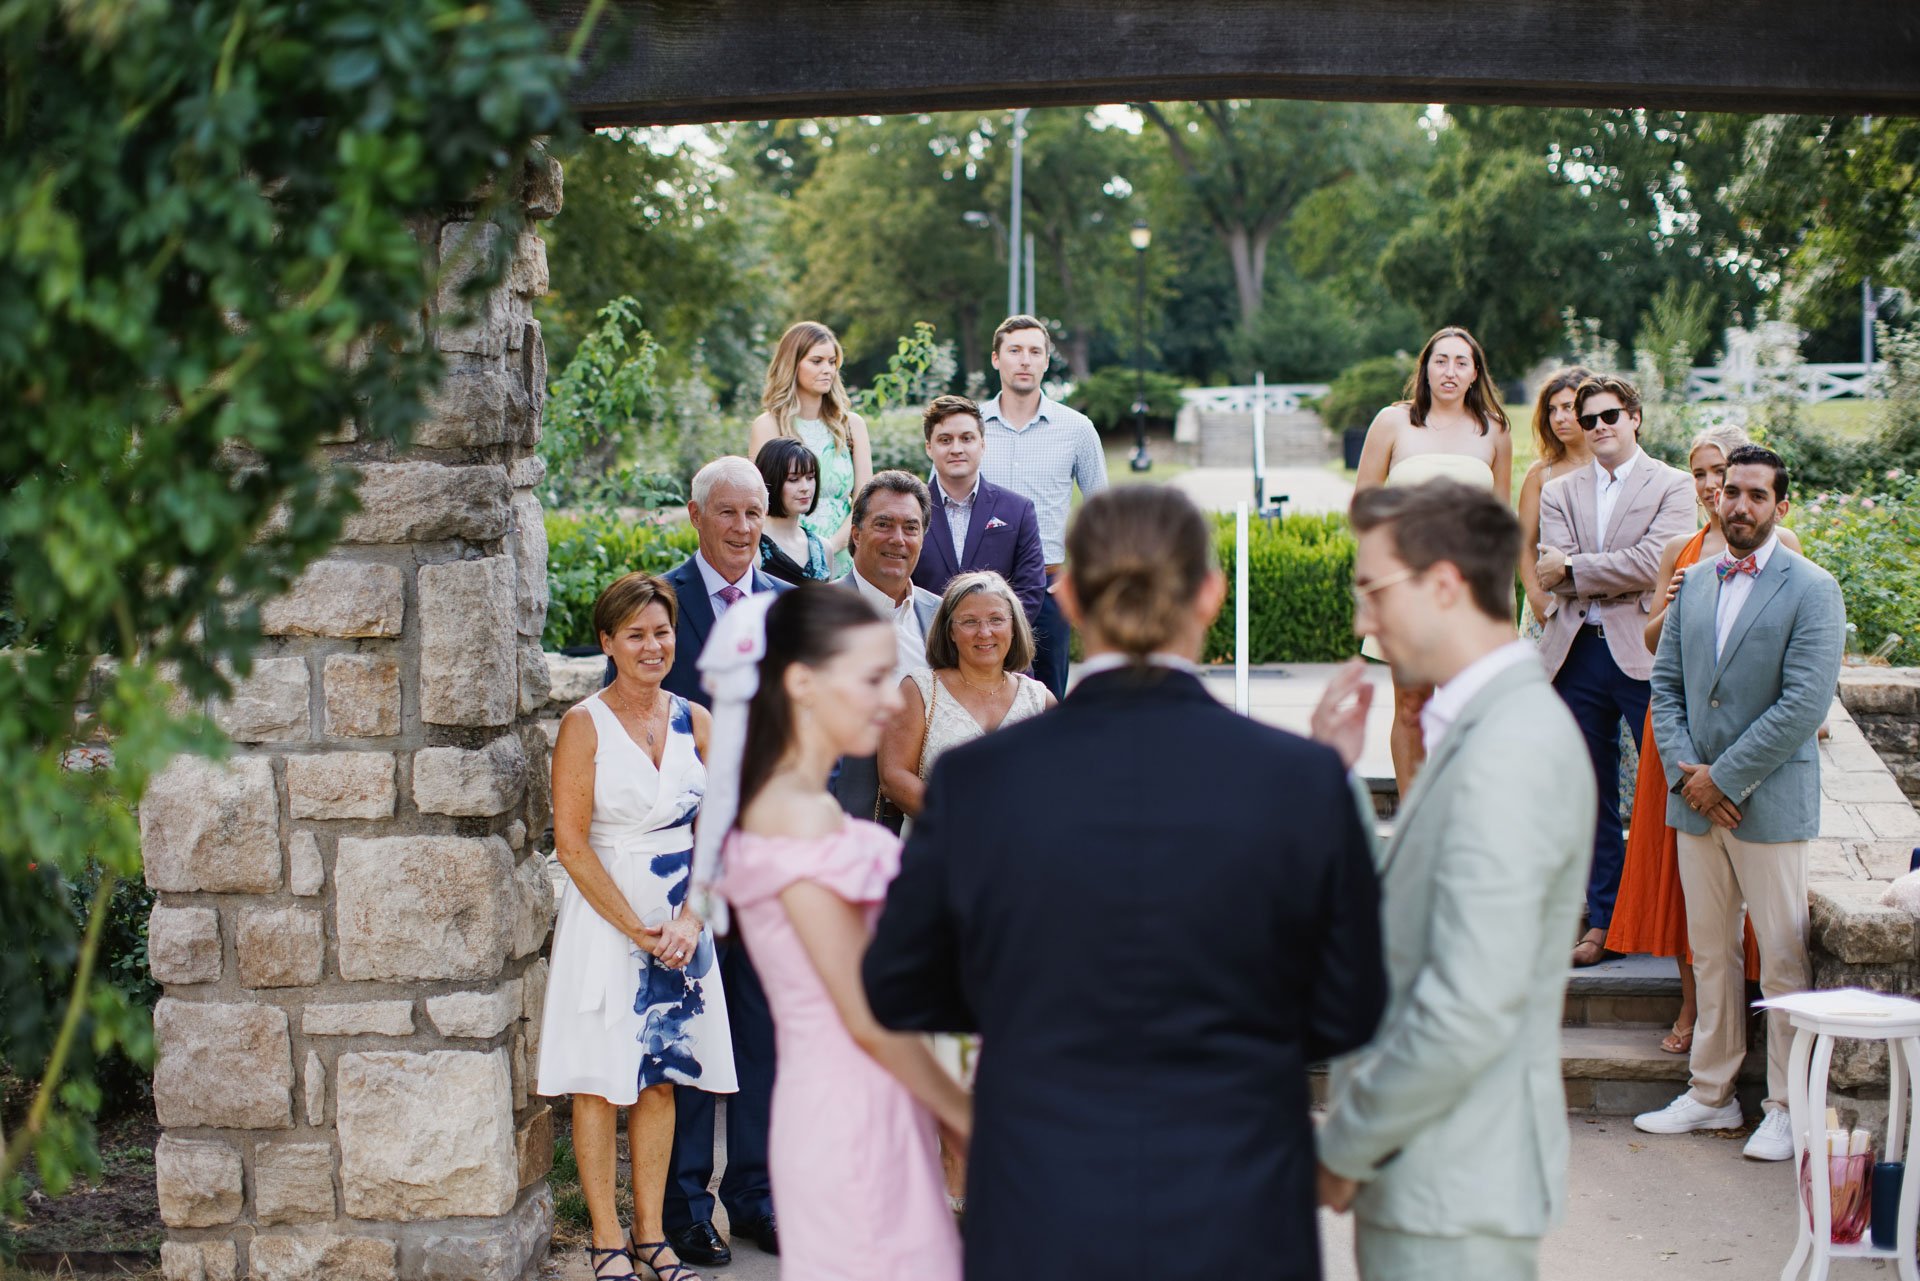 Kindling Wedding Photography Kansas City x Loose Park Rose Garden Wedding Ceremony_15.JPG